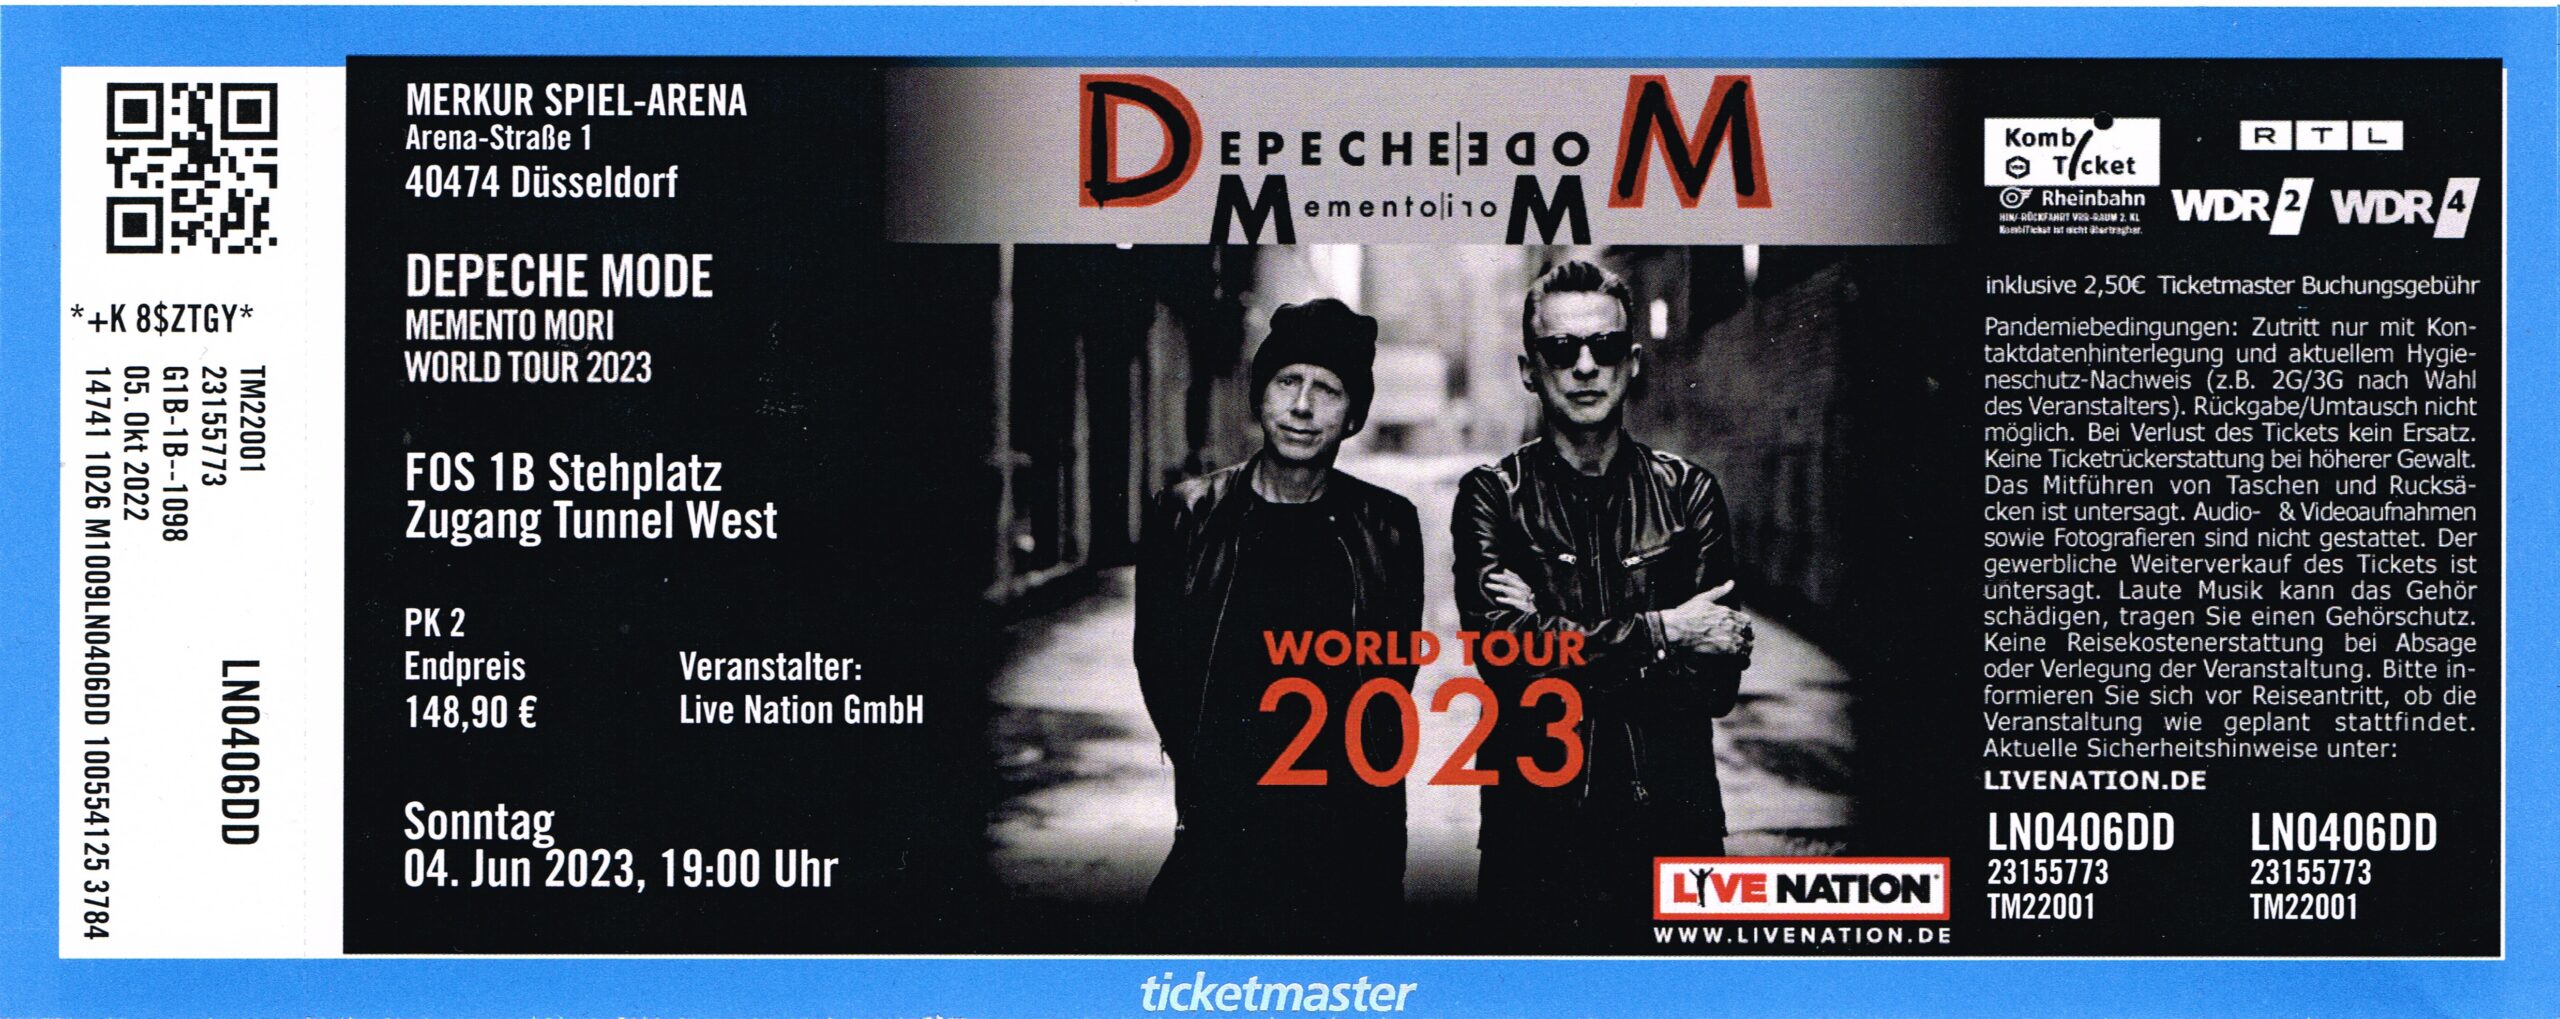 04.06.2023 -Depeche Mode - Memento Mori @Düsseldorf/MERKUR SPIEL ARENA